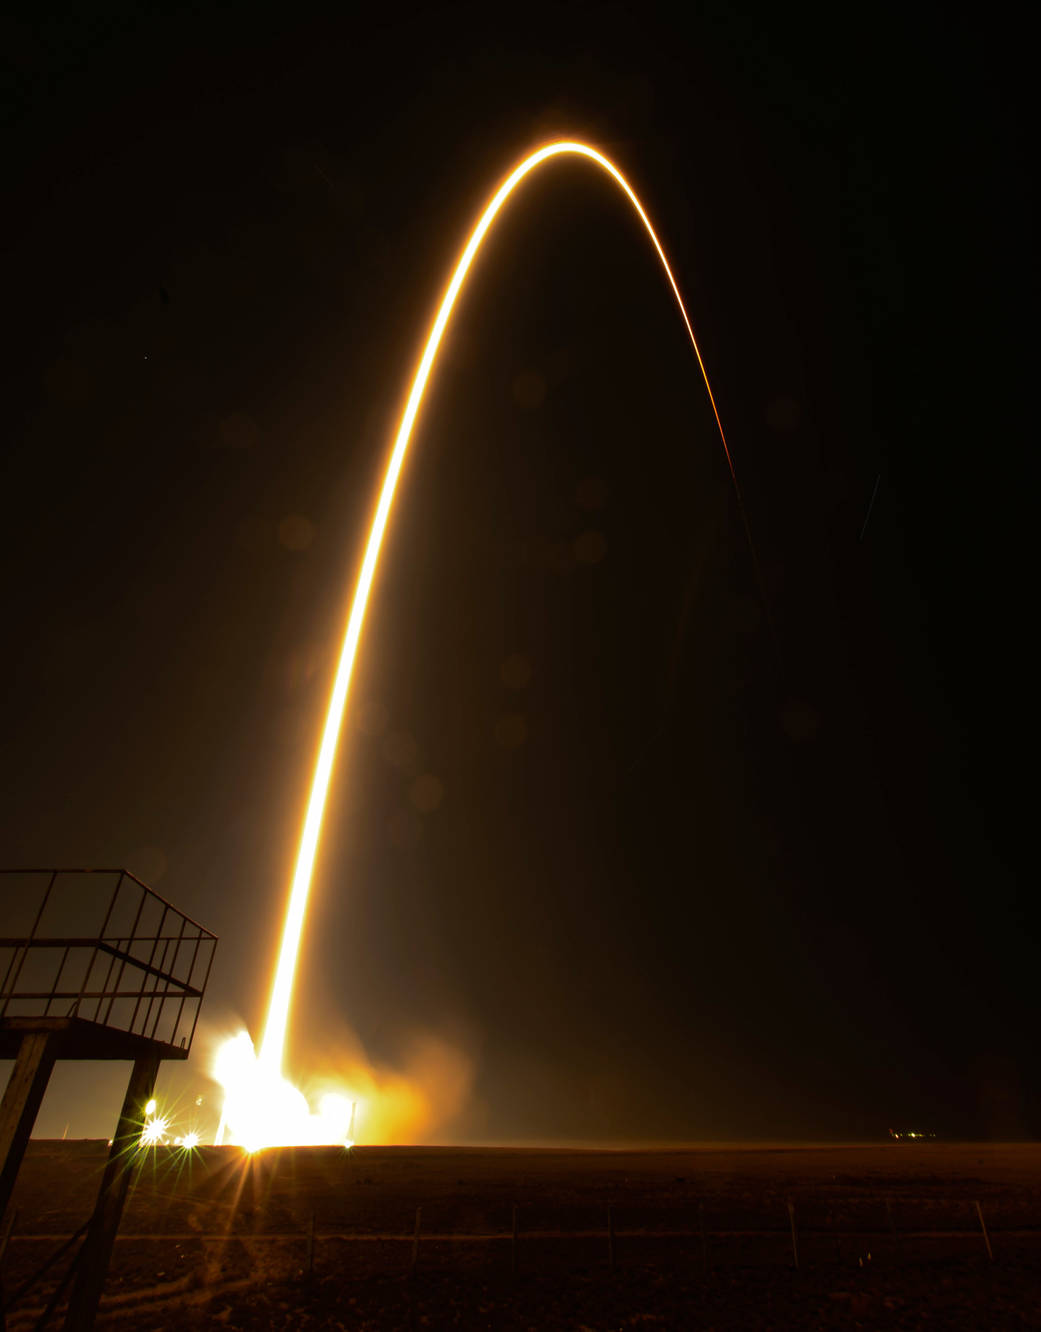 Soyuz launch